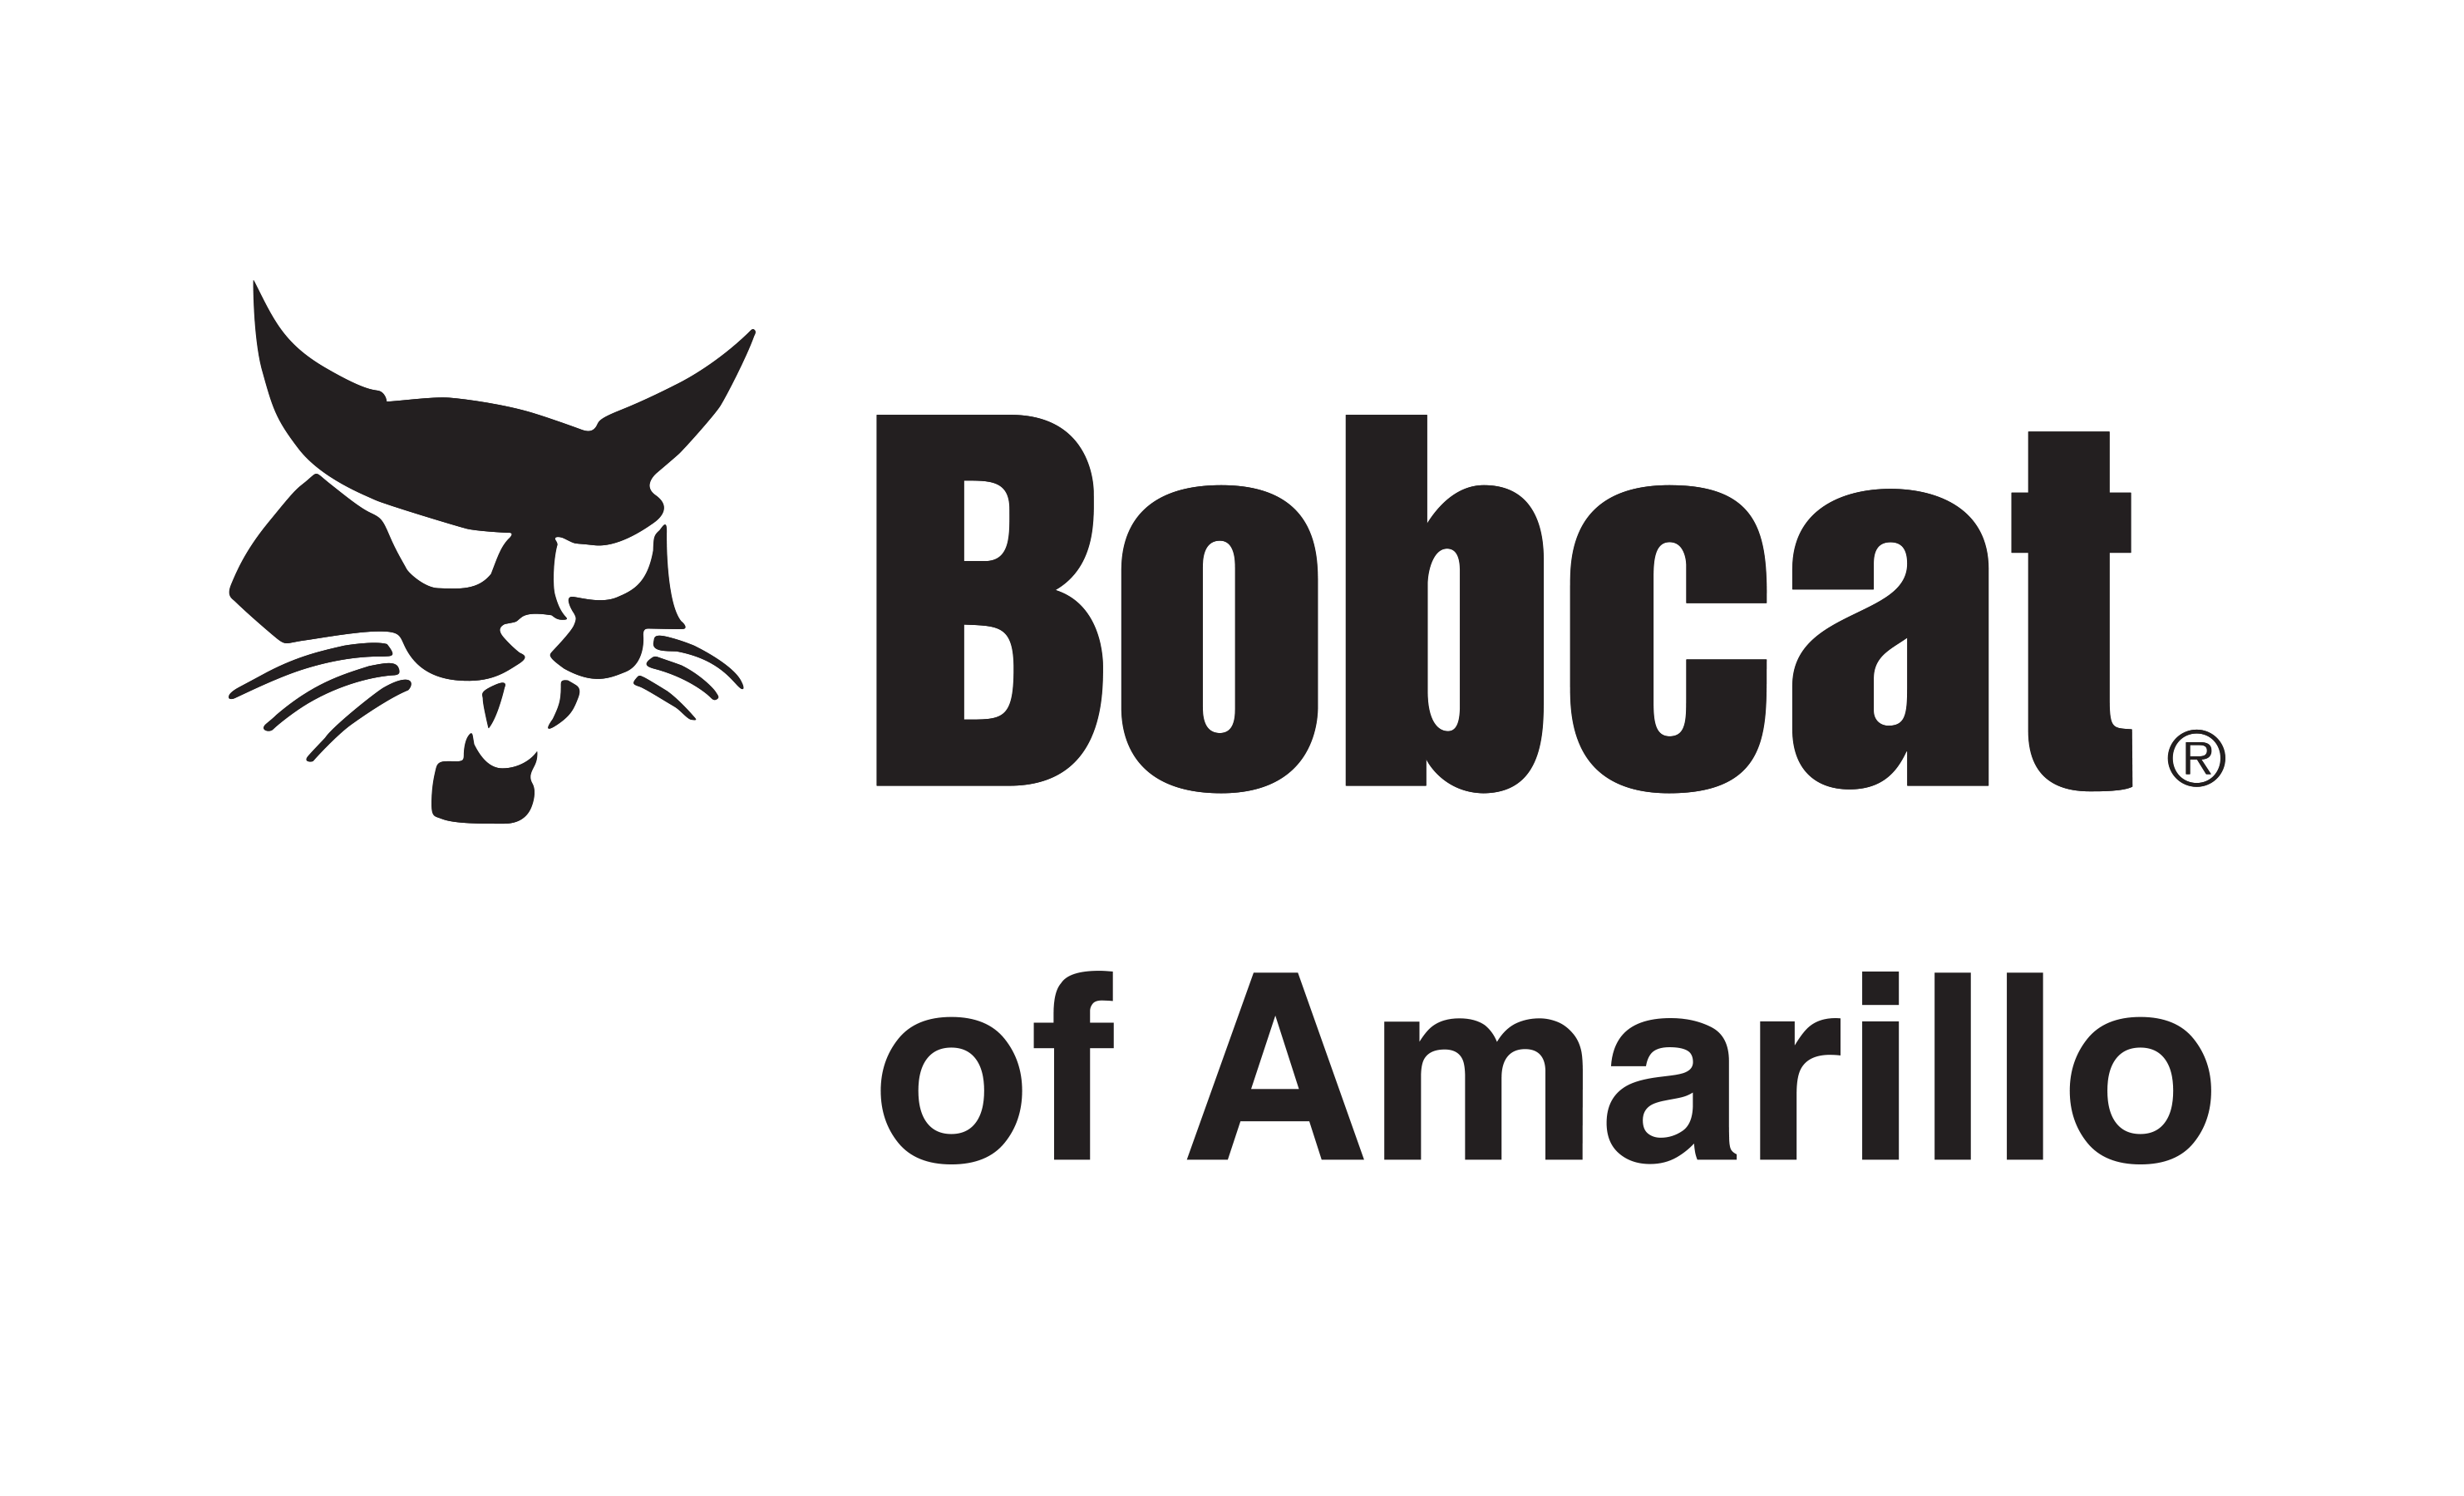 Bobcat Company Logo - Bobcat Construction Equipment Dealer in Texas | BobcatCCE.com